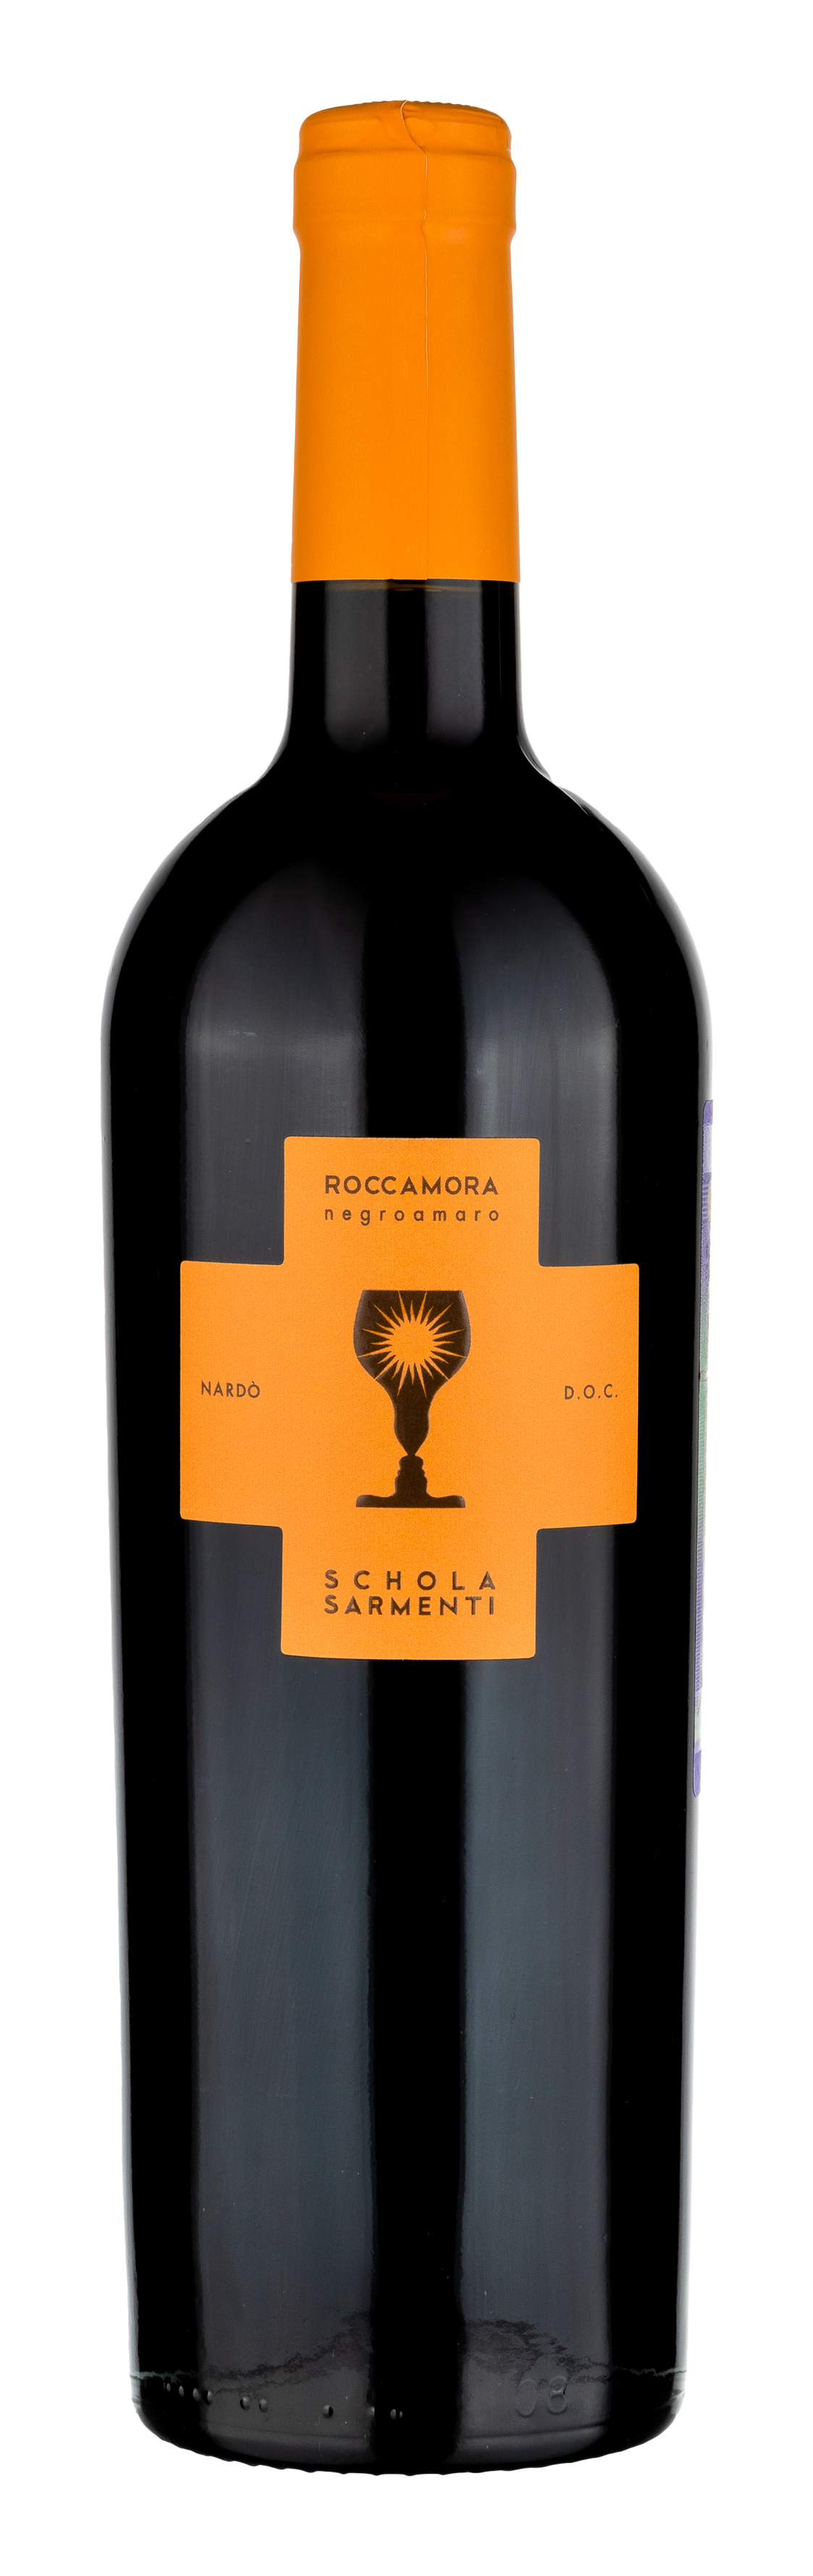 Wine Roccamora Negroamaro